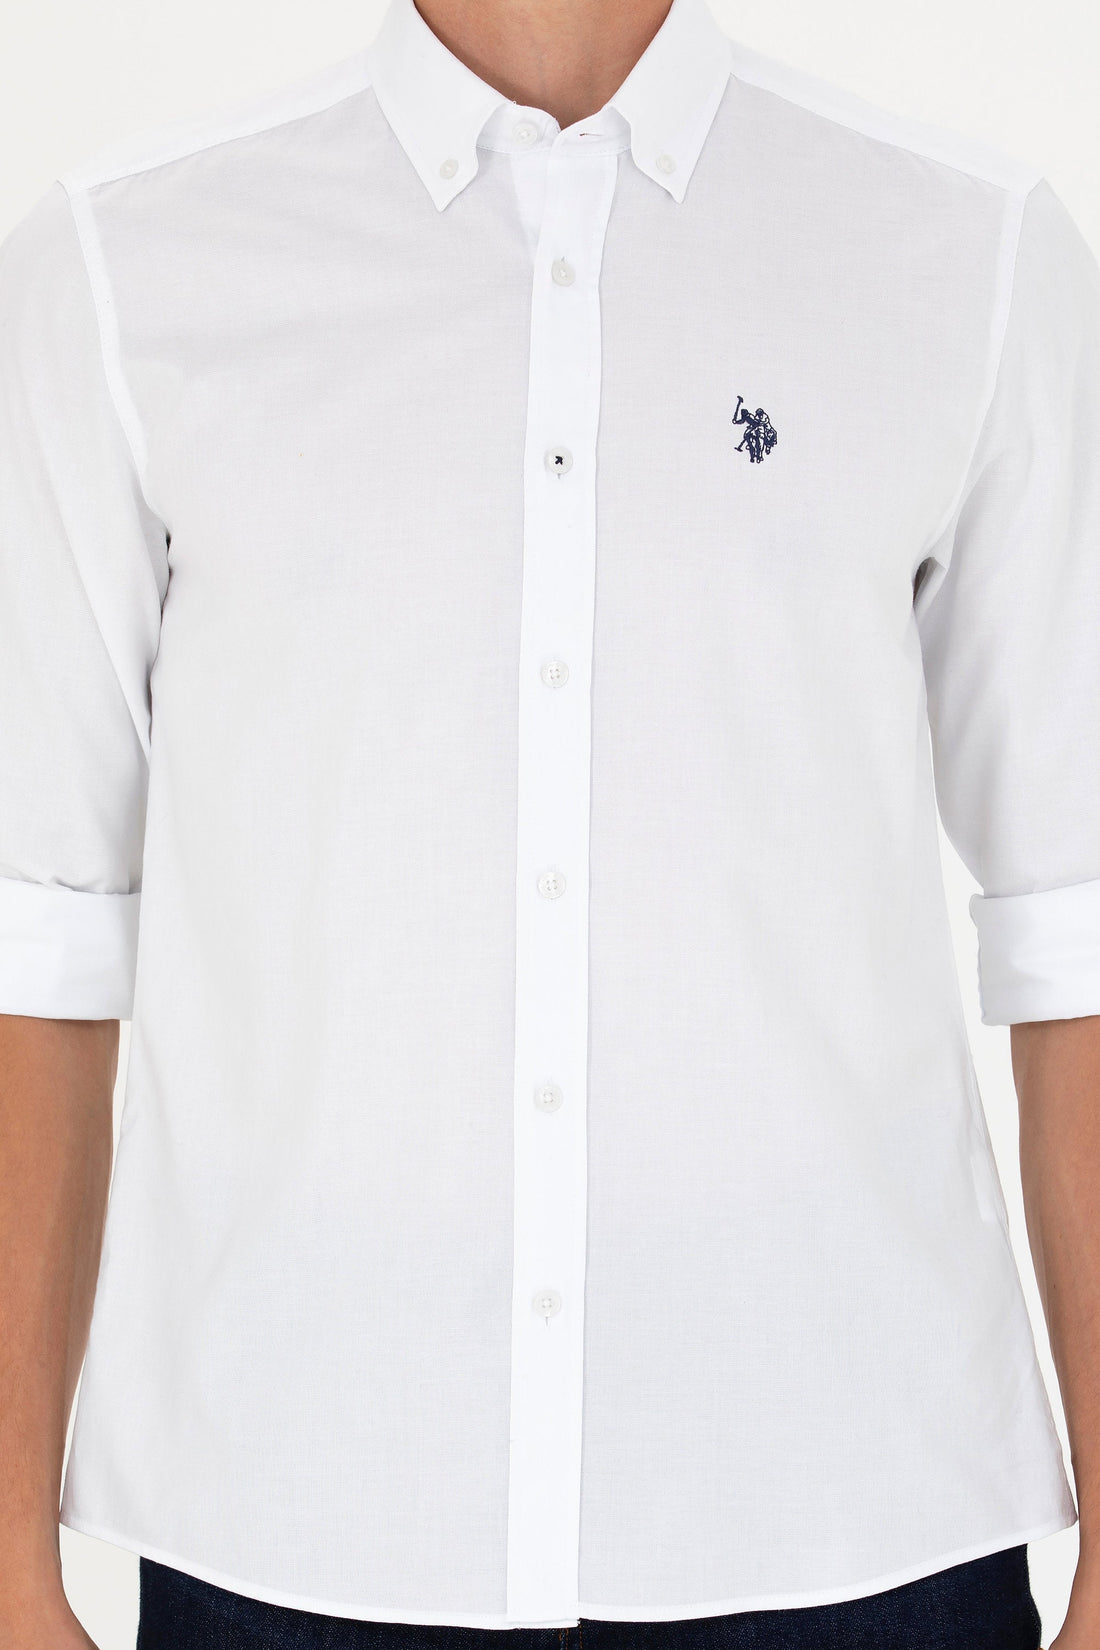 White Shirt With USPA Logo_G081SZ0040 1672487_VR013_02